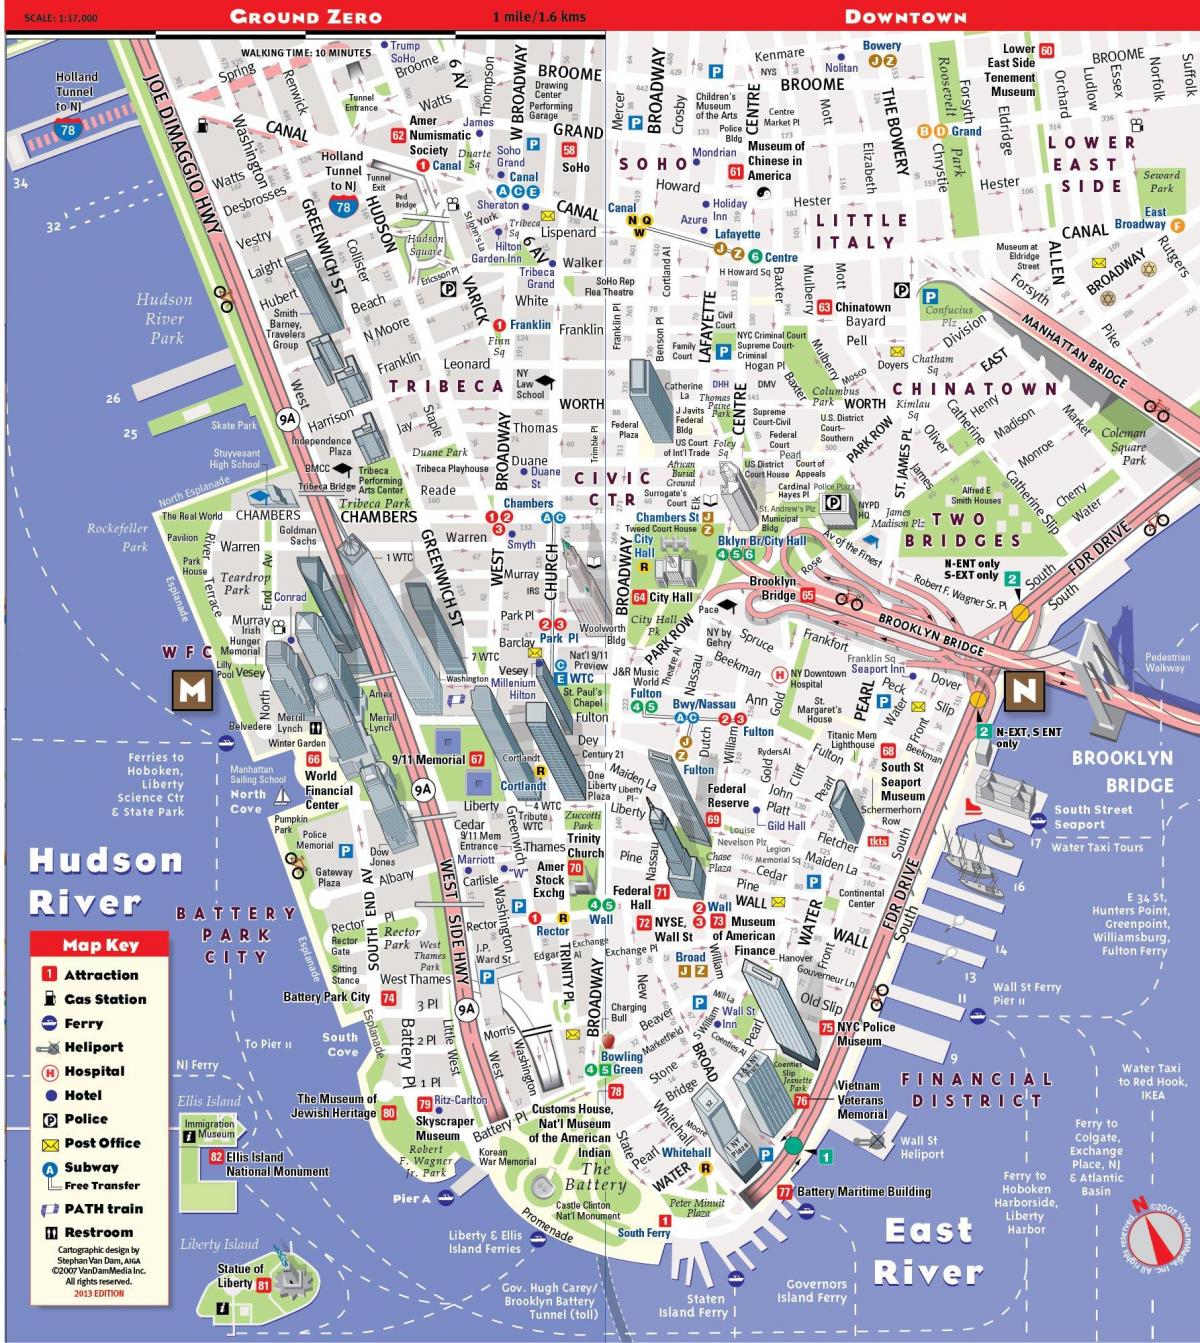 Plan du centre ville de Manhattan